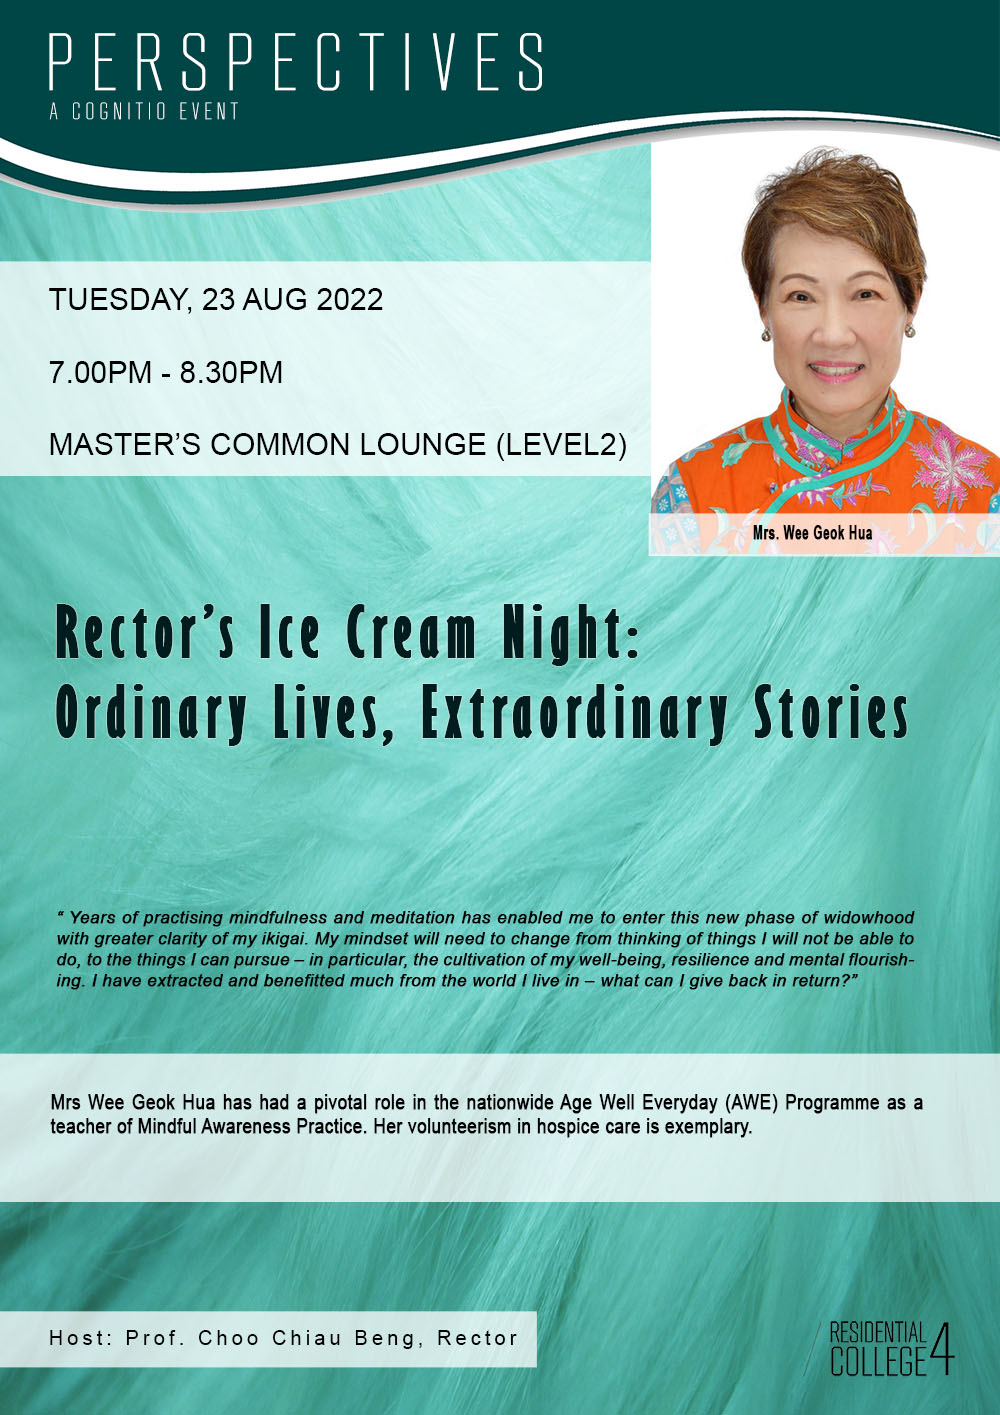 Rector's Ice Cream Night - Mrs. Wee Geok Hua